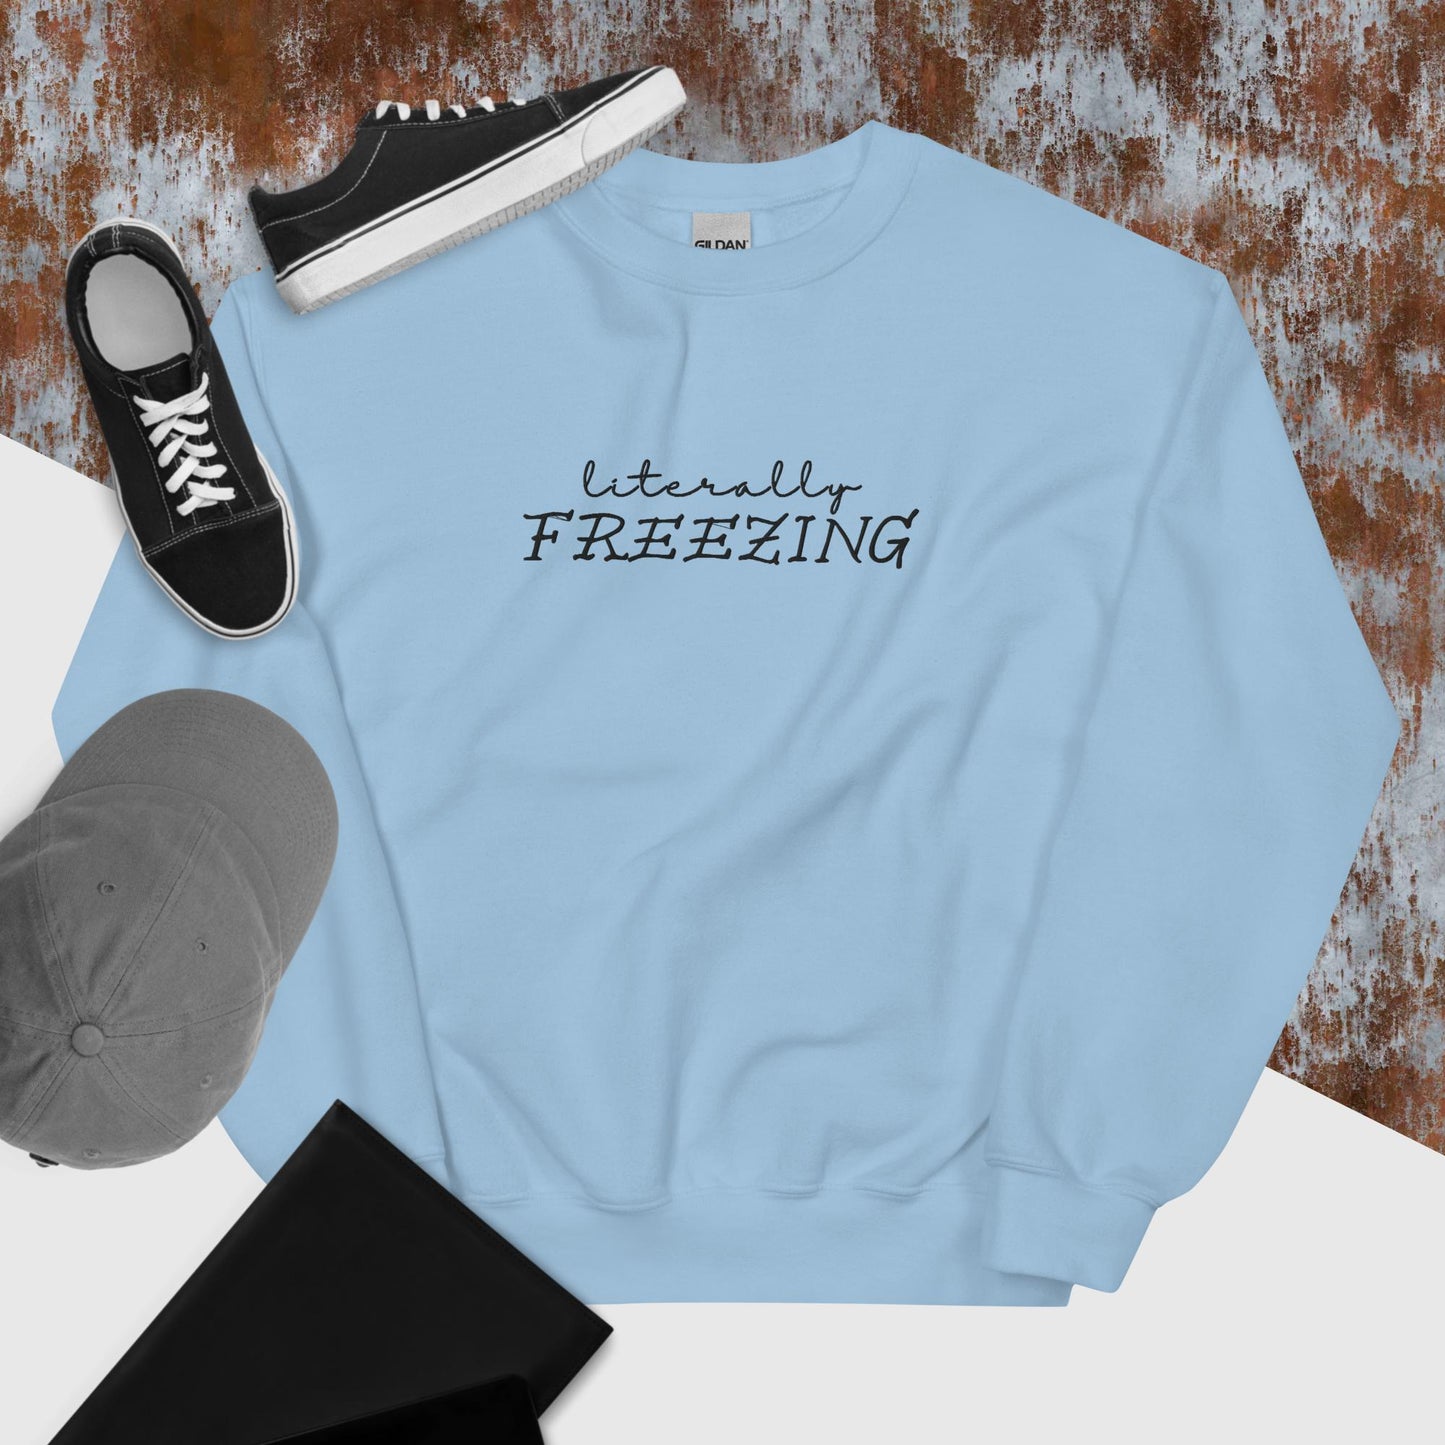 "Literally FREEZING" in Embroidery on Unisex Sweatshirt